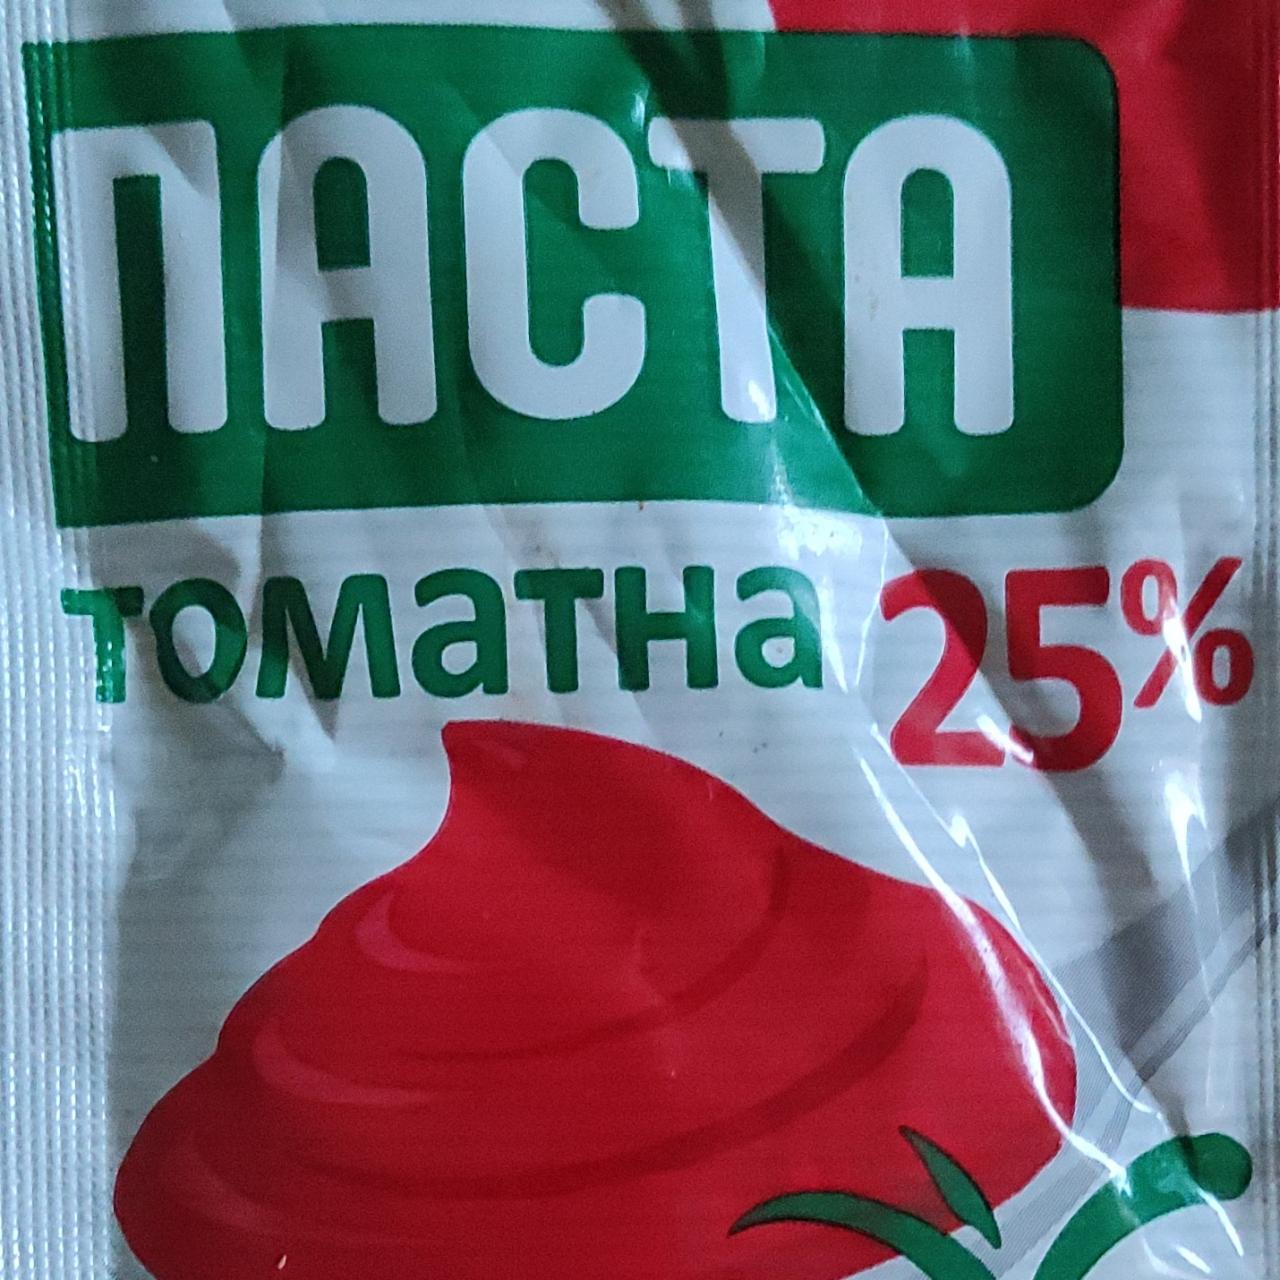 Фото - Паста томатная 25% Посад